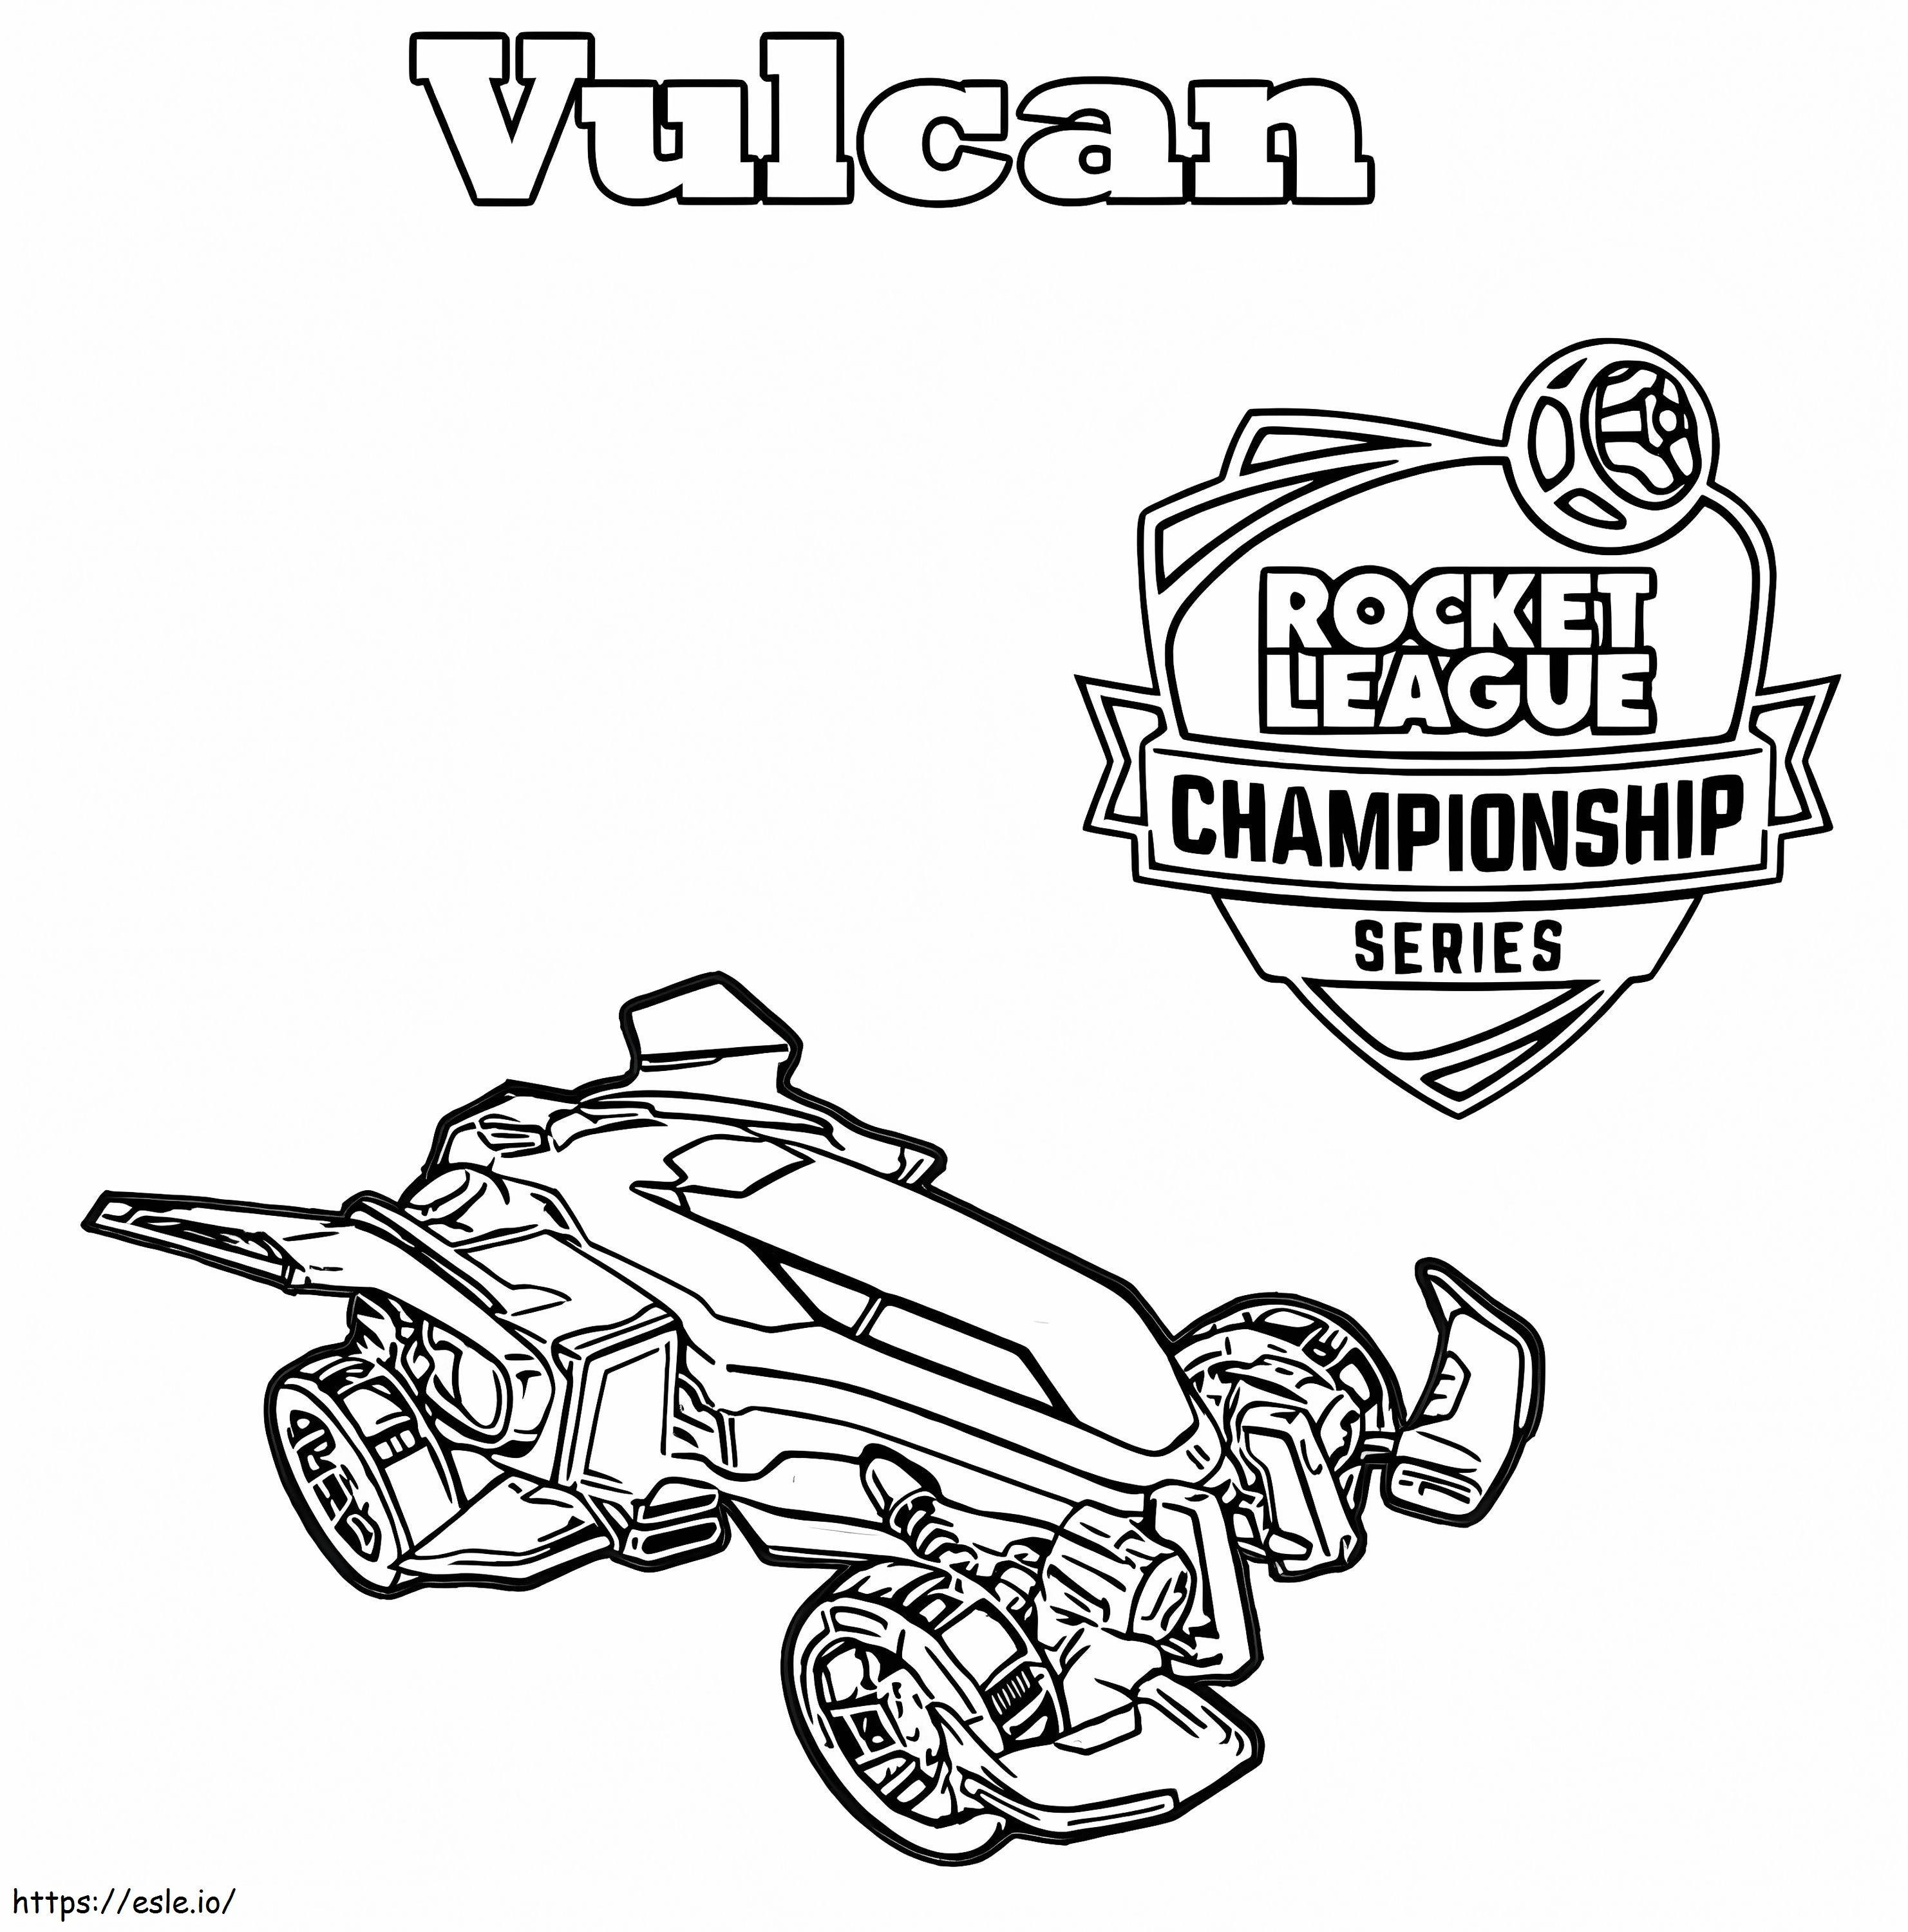 Vulcan-machine kleurplaat kleurplaat